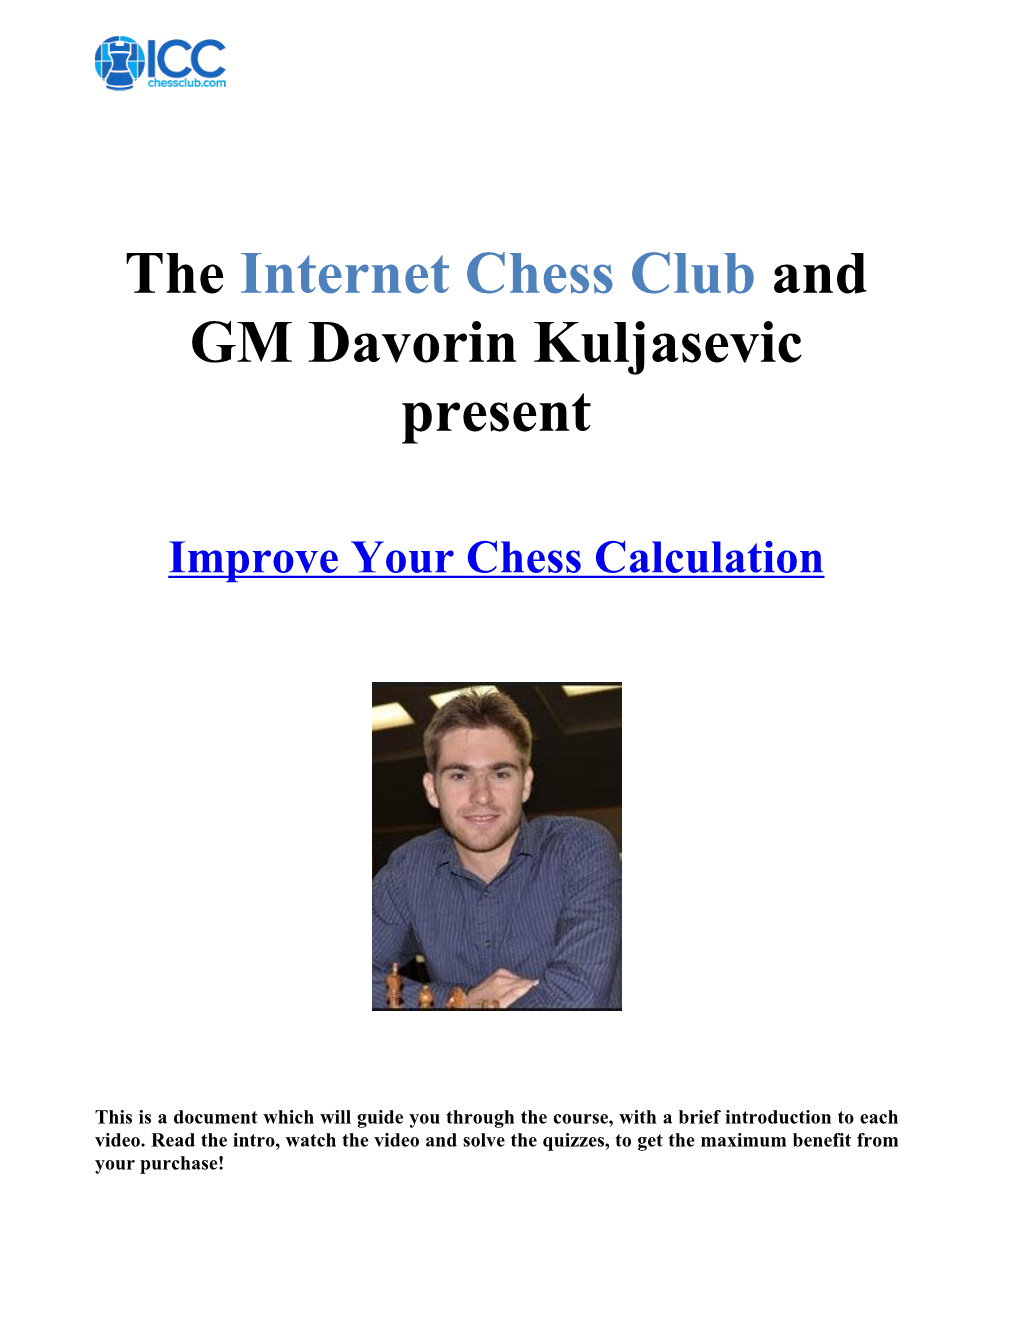 The Internet Chess Club and GM Davorin Kuljasevic Present